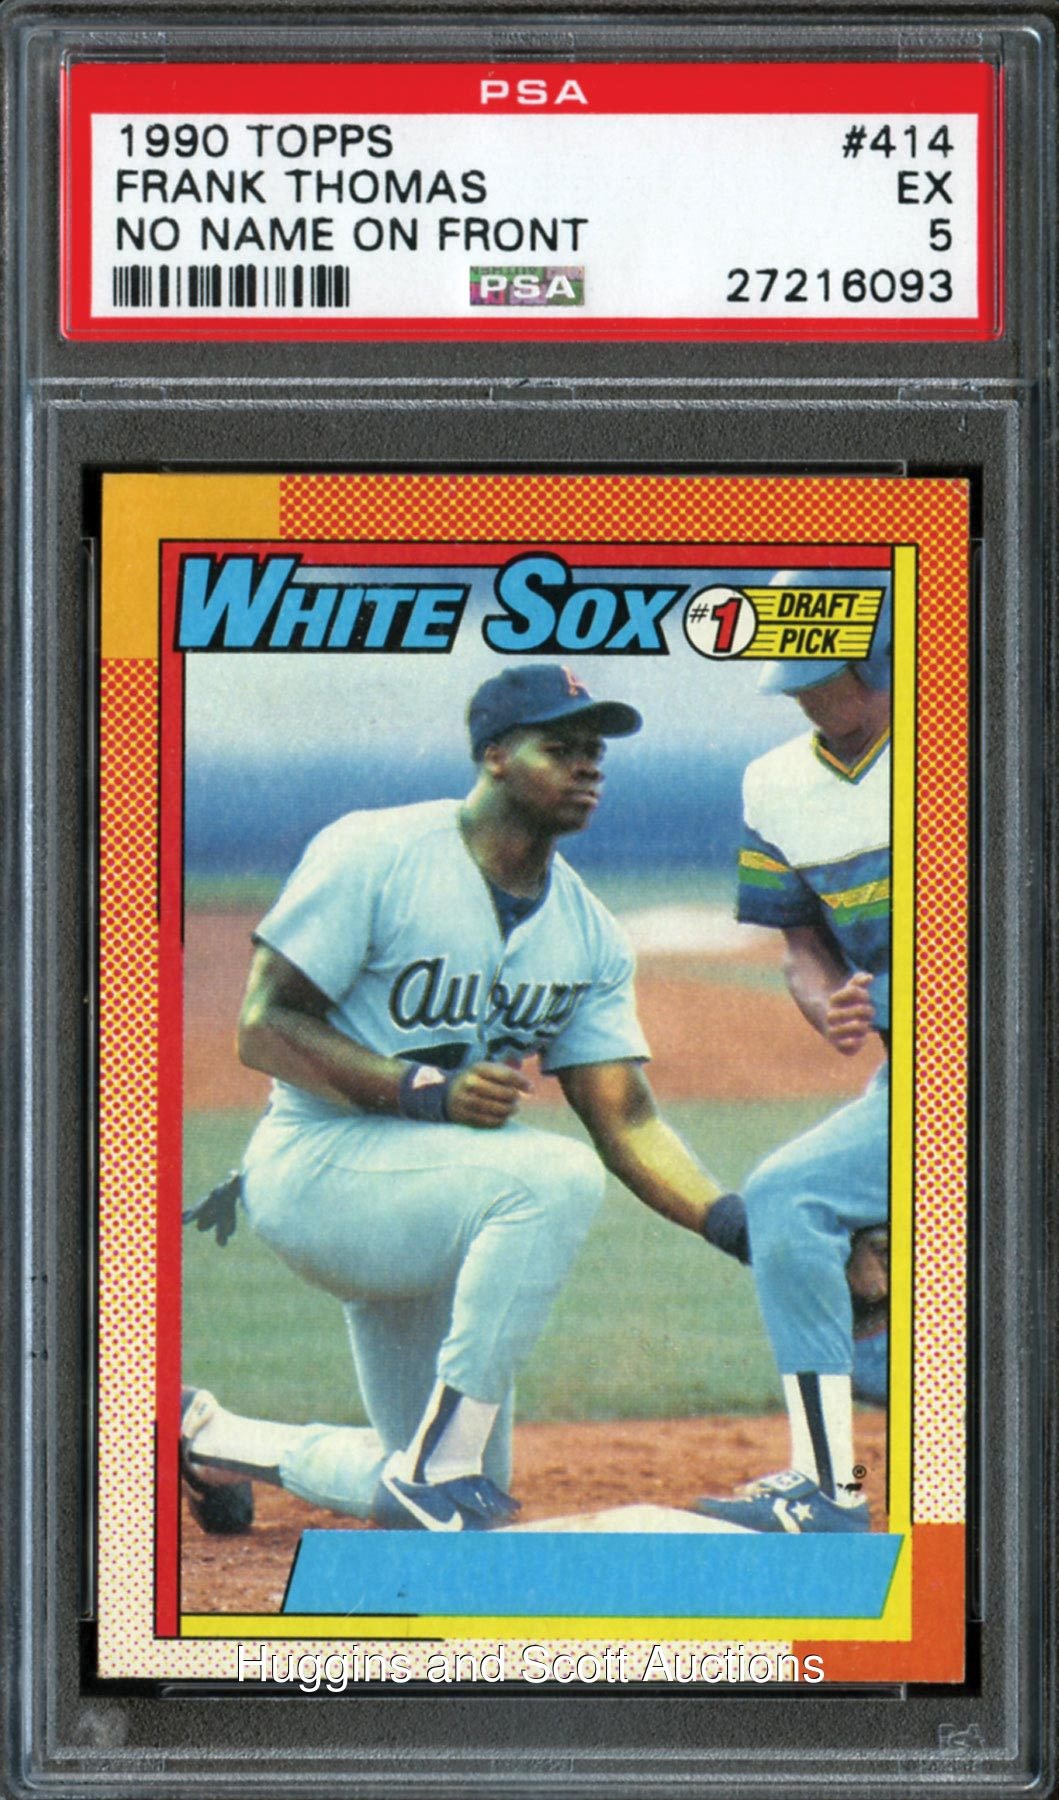 1990 Topps Baseball #414 Frank Thomas Rookie No Name on Front - PSA EX 5